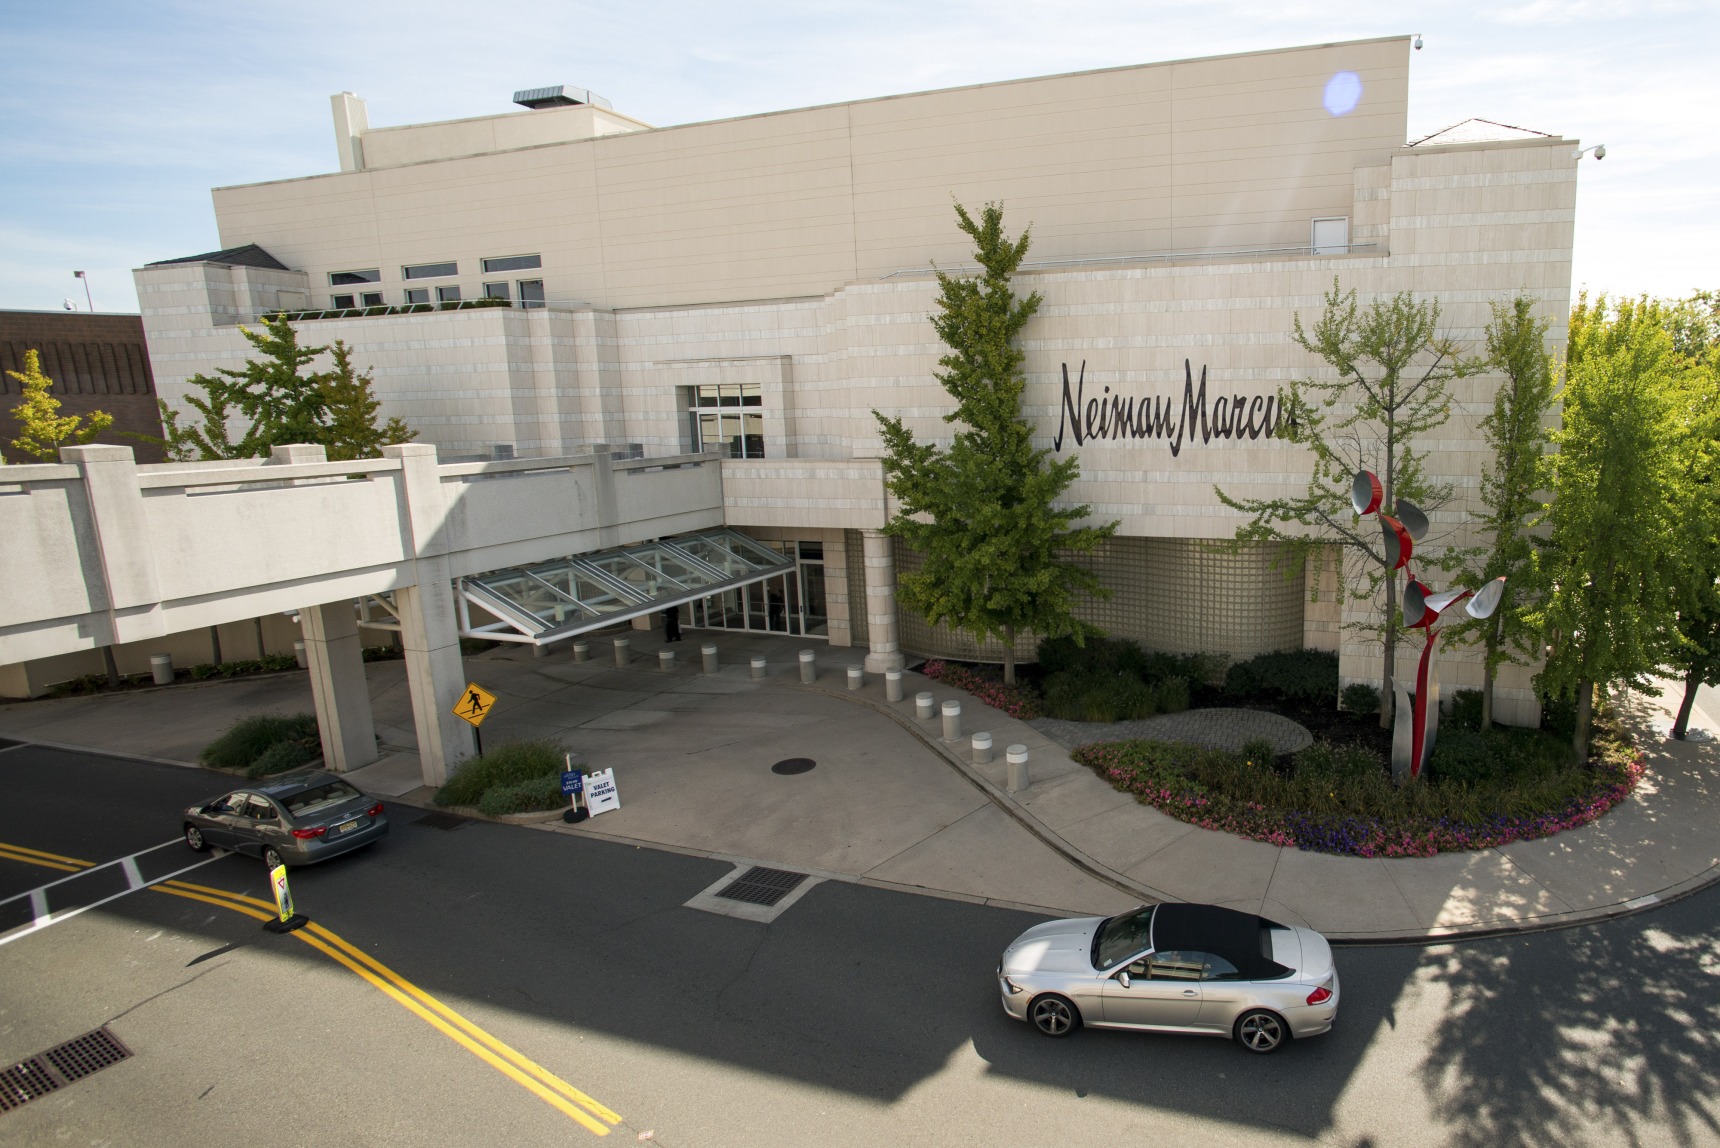 Neiman Marcus' Luxury Dreams Were Shaken by Debt and Disease - Bloomberg